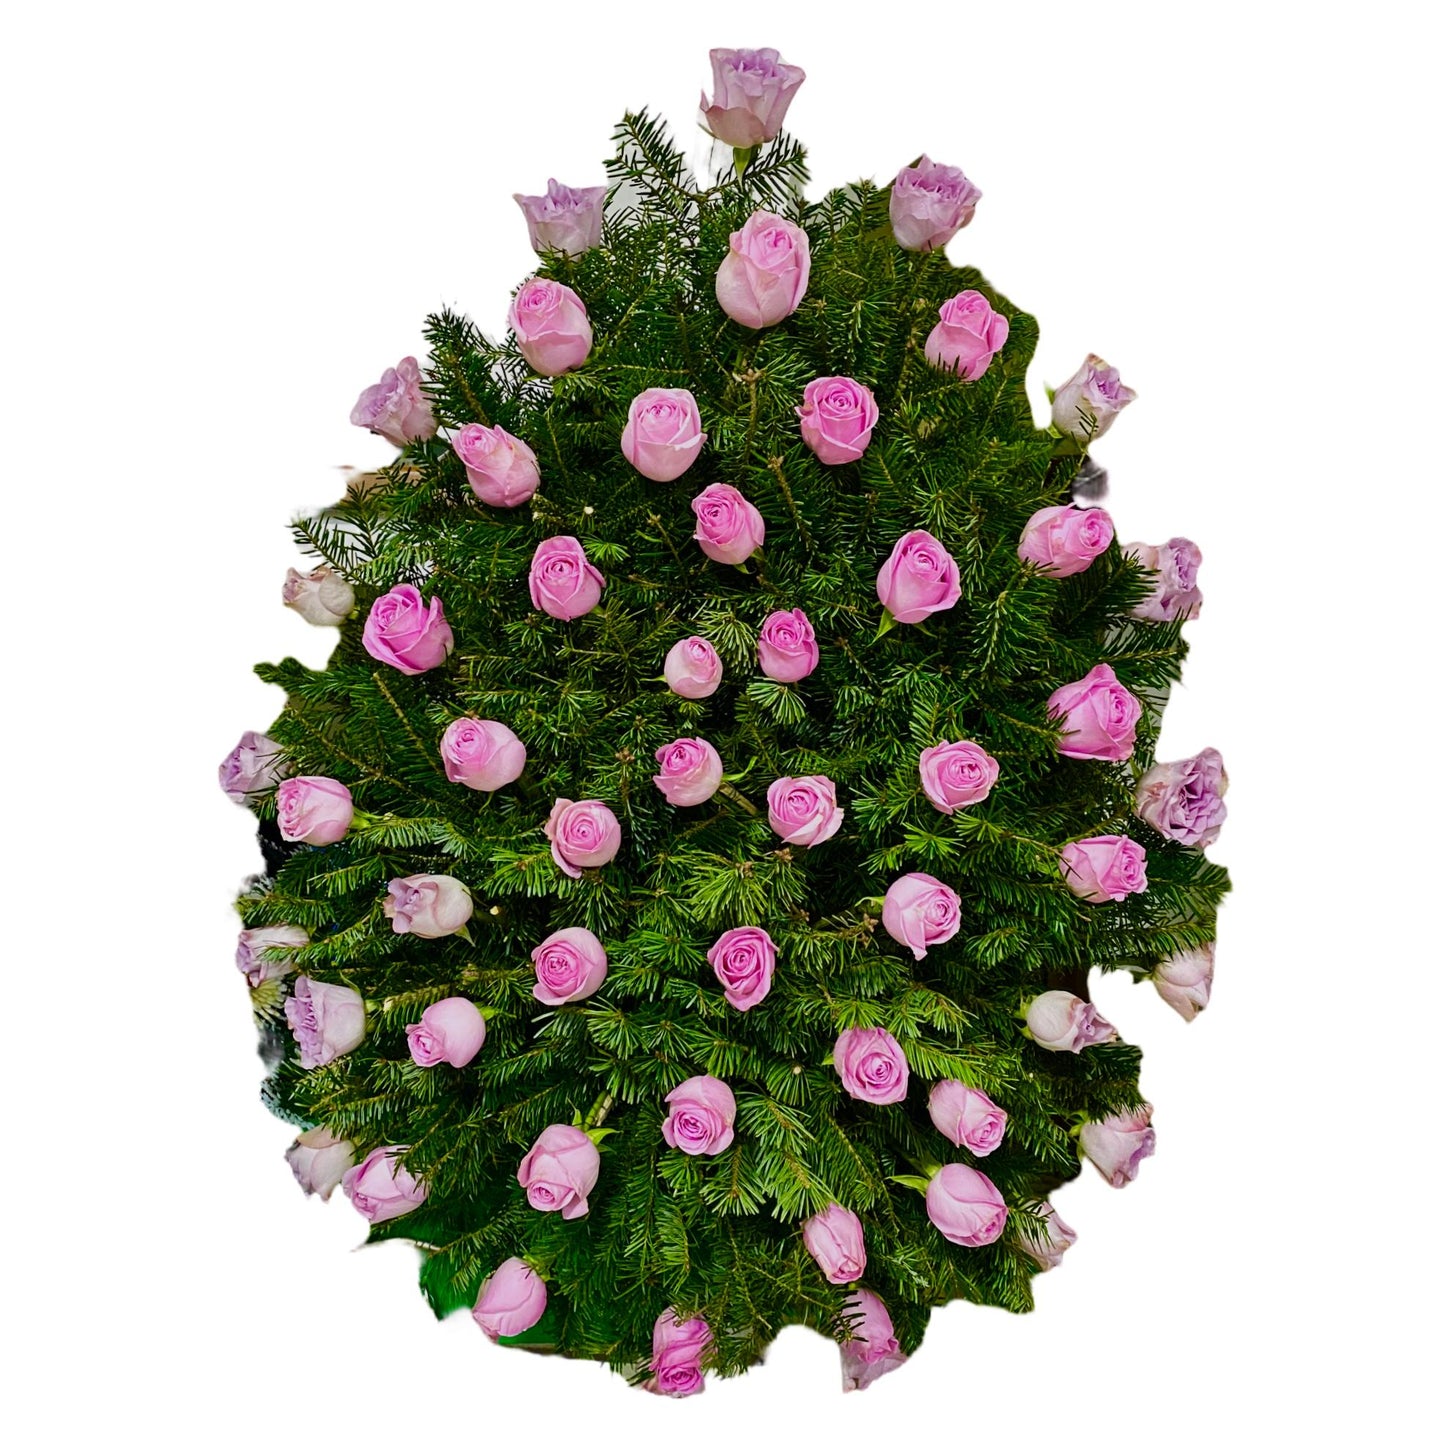 Corona funerara realizata exclusiv din trandafiri roz (#F19CBB) si din brad proaspat verde (#008000)